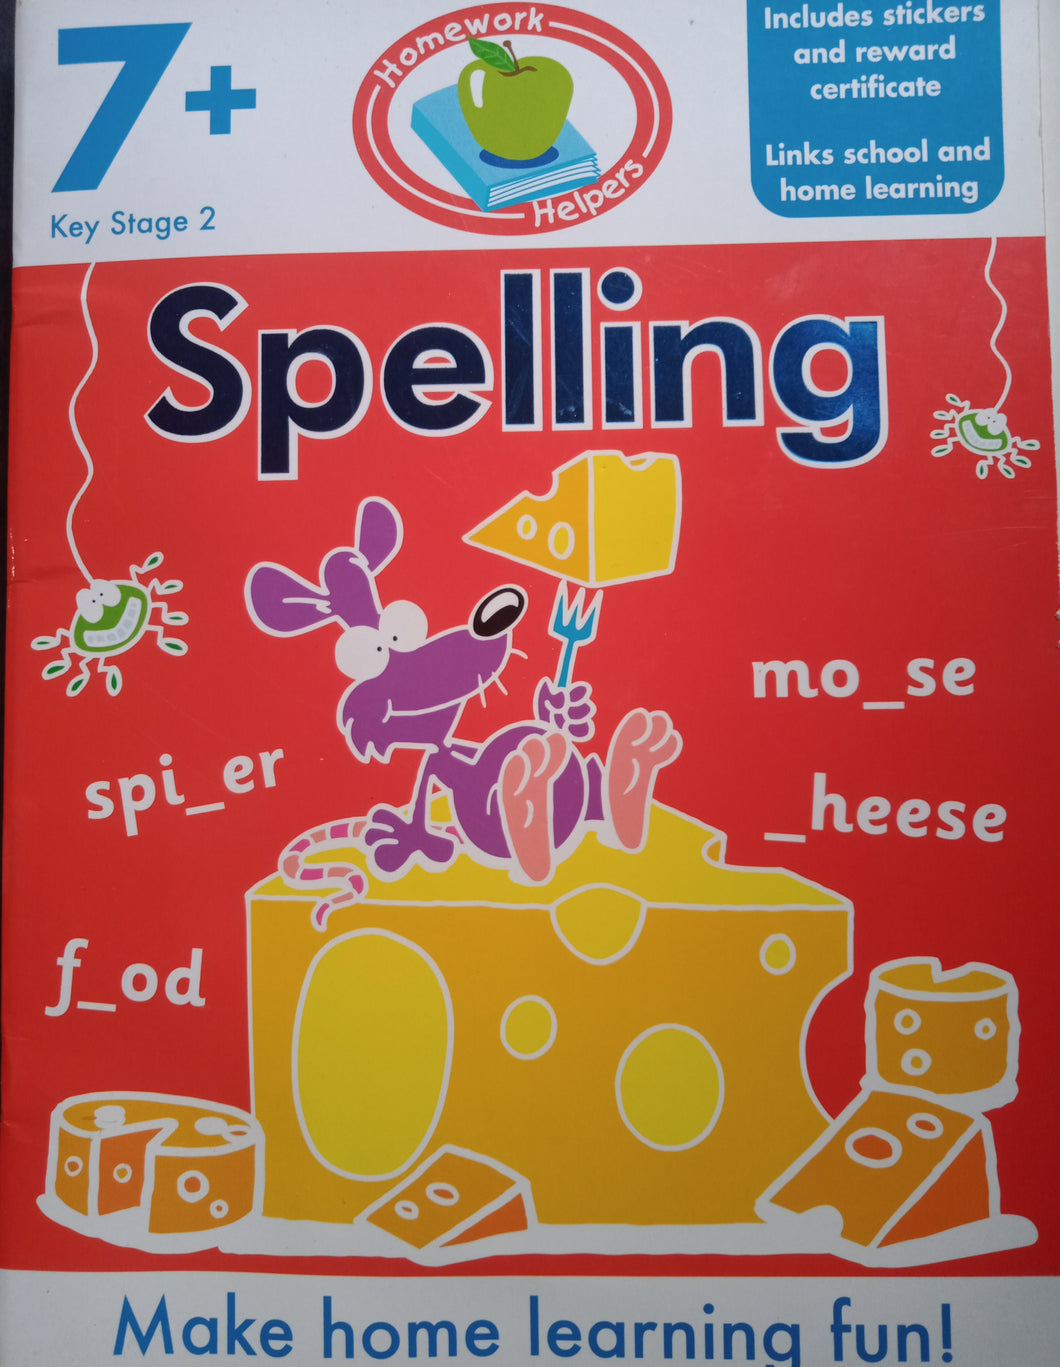 7+  Spelling